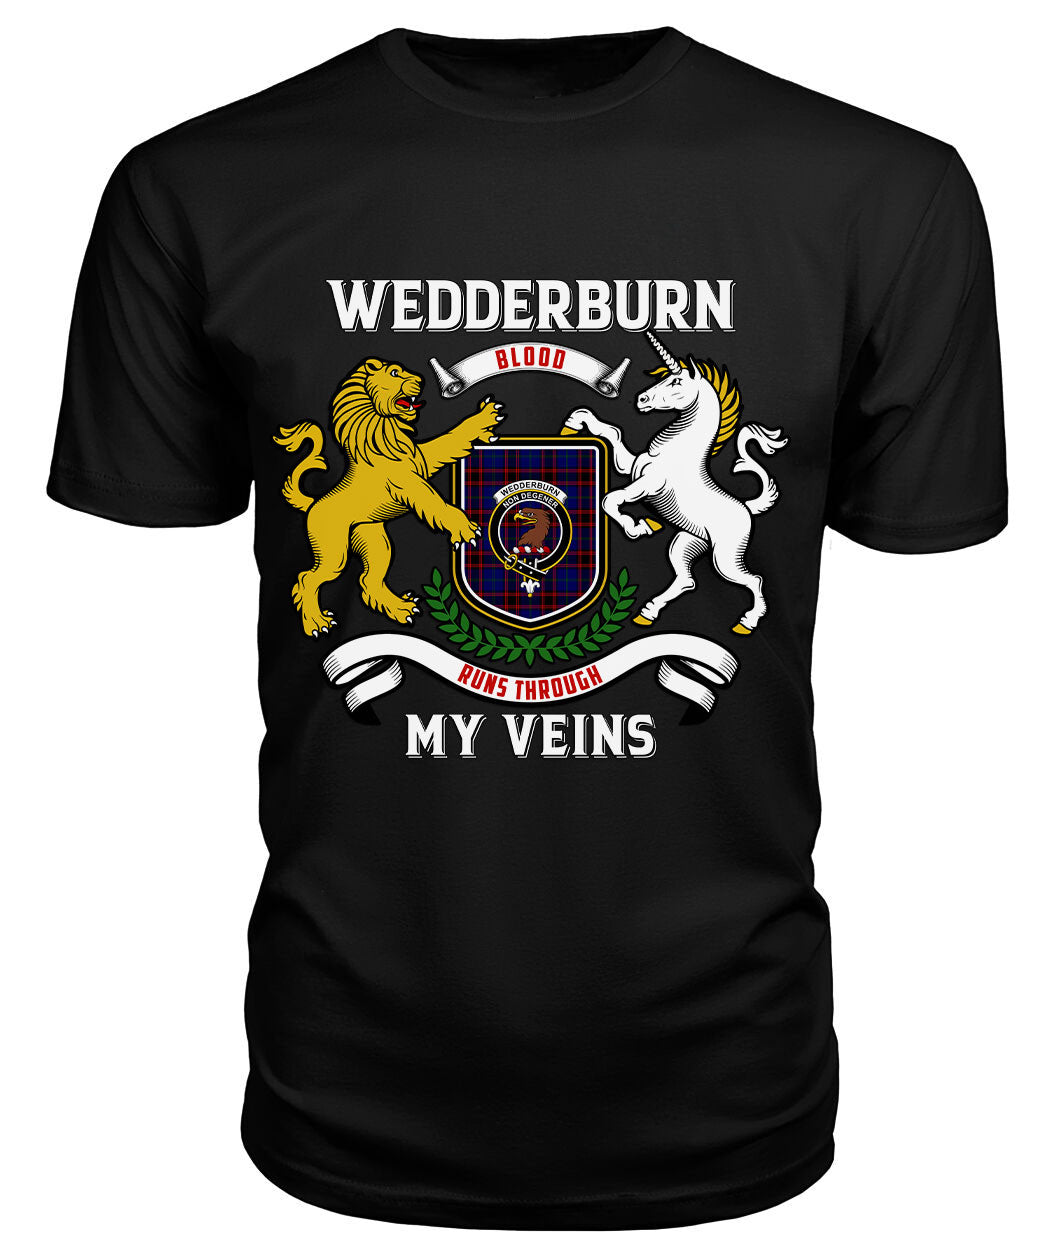 Wedderburn Tartan Crest 2D T-shirt - Blood Runs Through My Veins Style